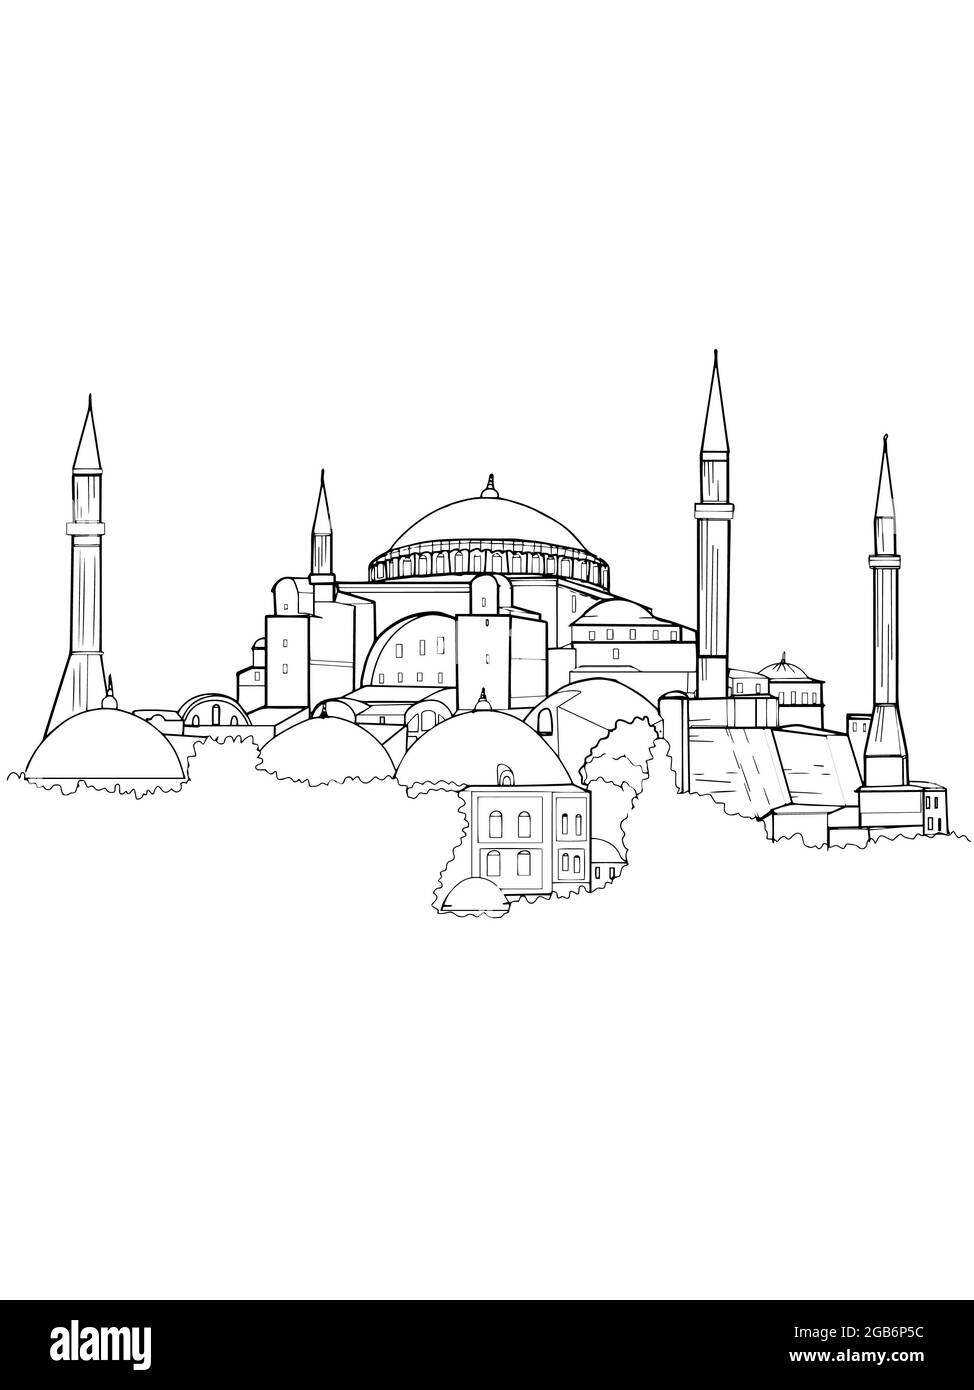 Le musée Sainte-Sophie - Ayasofya en Turquie illustration, ligne drawingi Banque D'Images